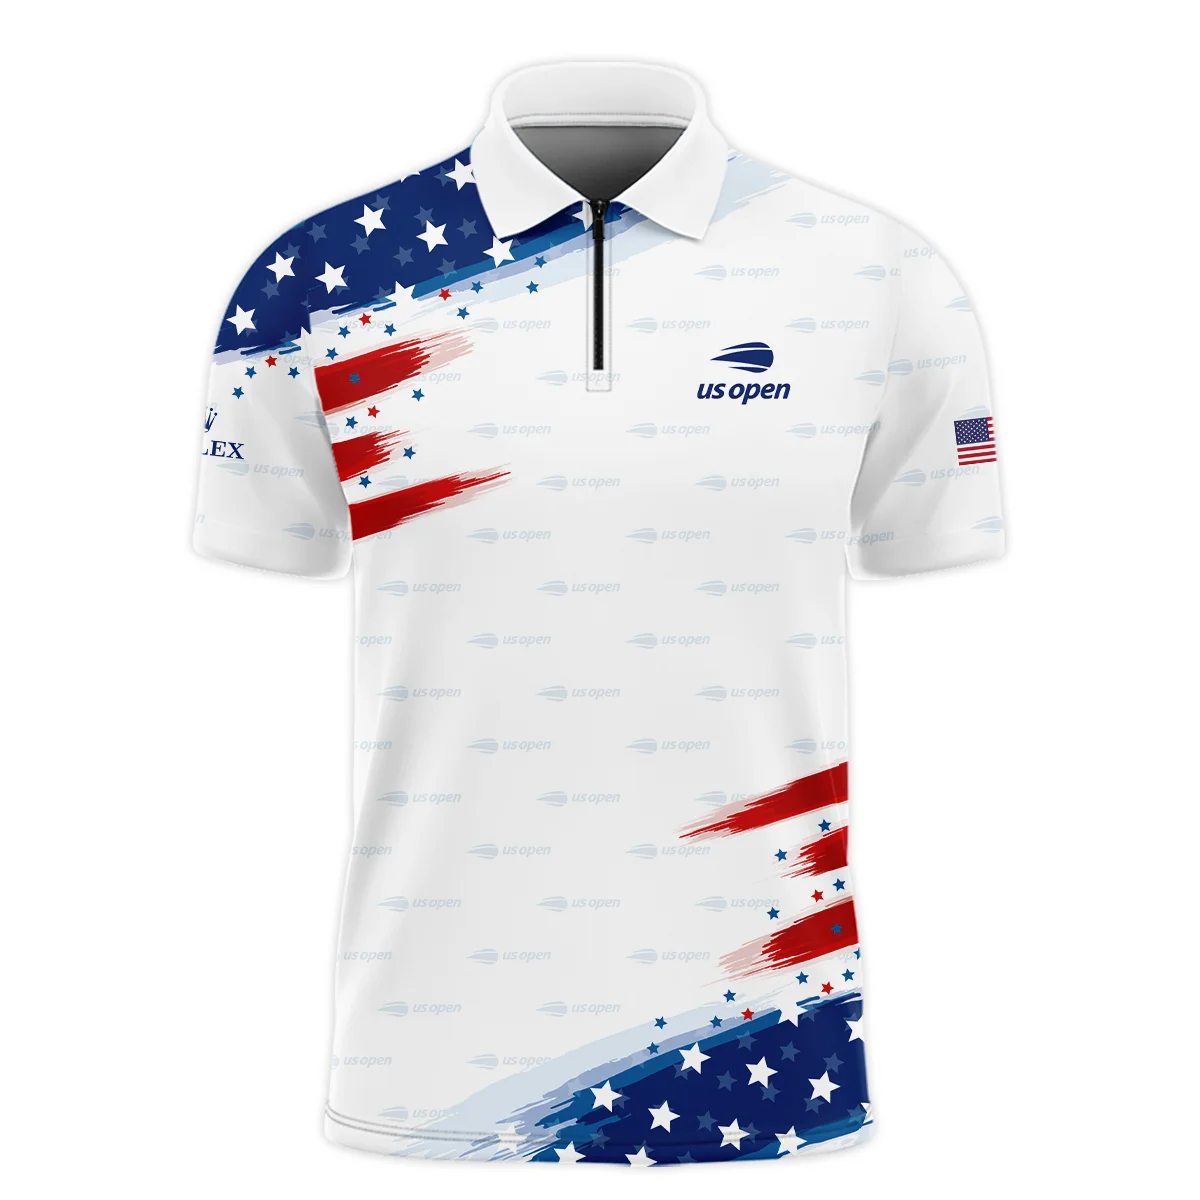 Tennis Love Sport Mix Color US Open Tennis Champions Rolex Hoodie Shirt Style Classic Hoodie Shirt